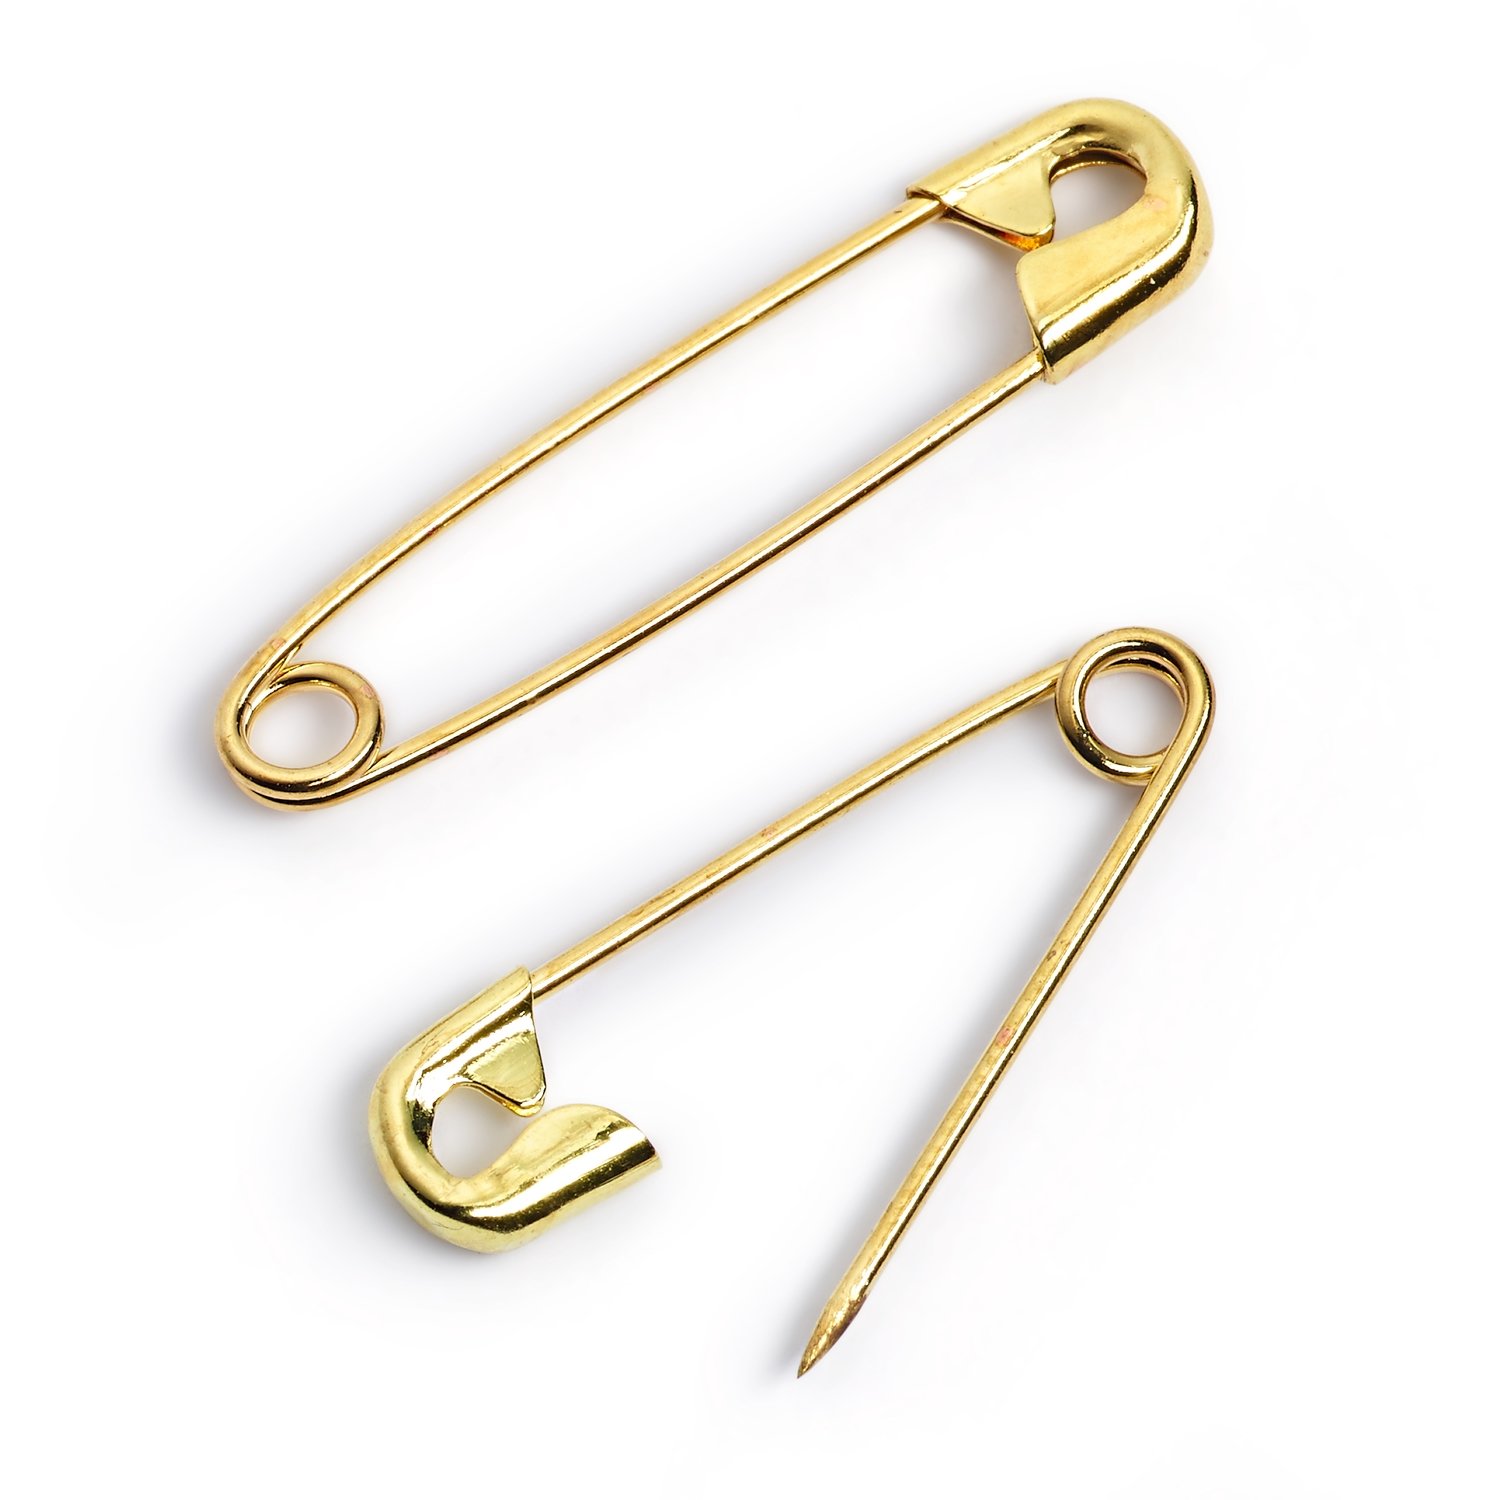 Safety pins brass 38 mm gold 12 pc